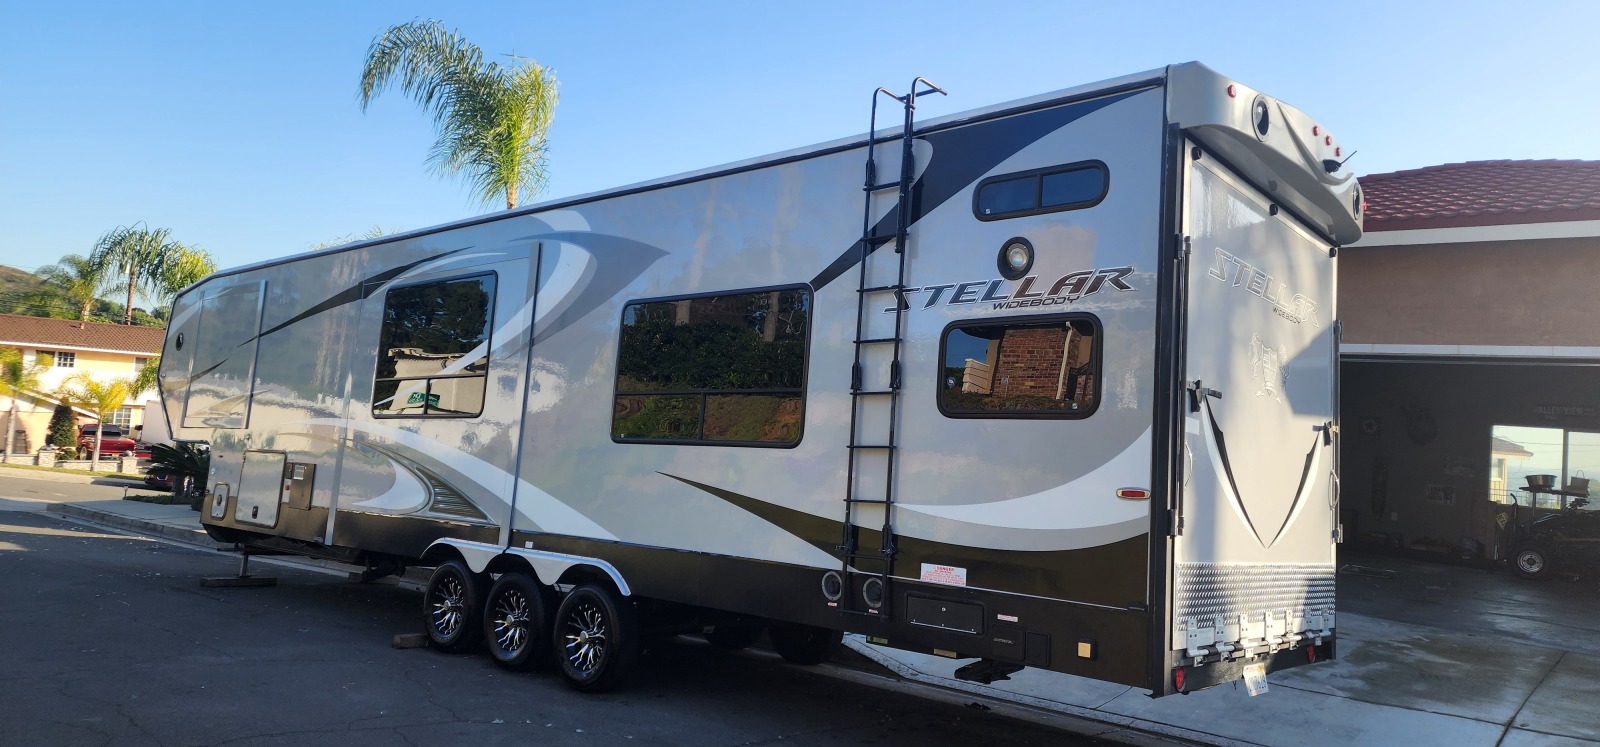 For Sale: 2015 Eclipse Stellar 33SSG + 4 Toy hauler 5th Wheel trailer  - photo0